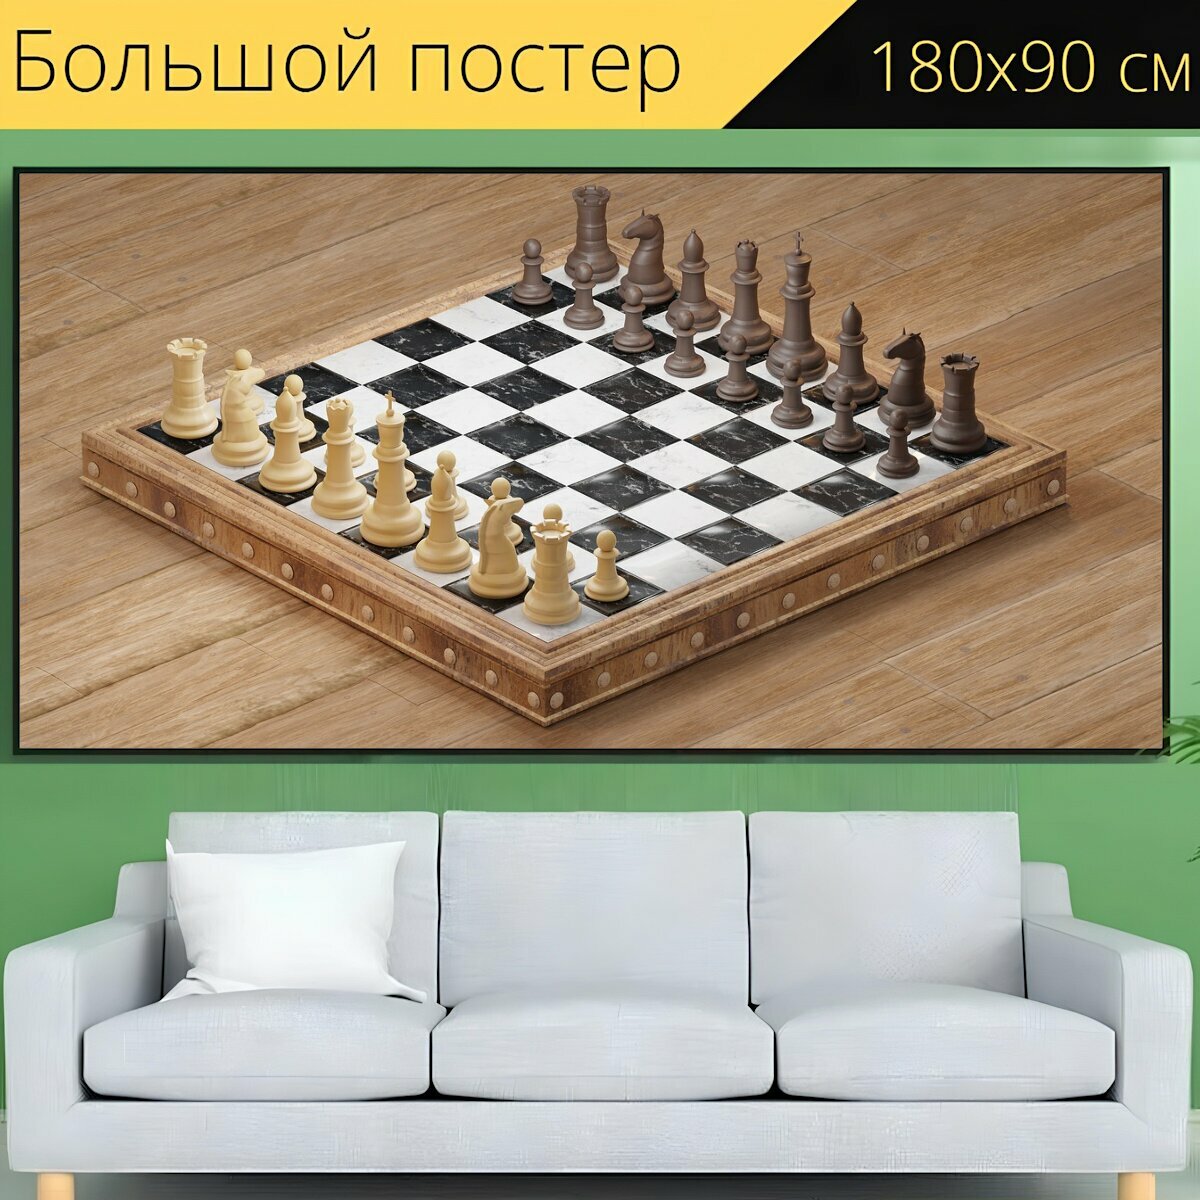 Большой постер "Шахматы, шахматная доска, рыцарь" 180 x 90 см. для интерьера